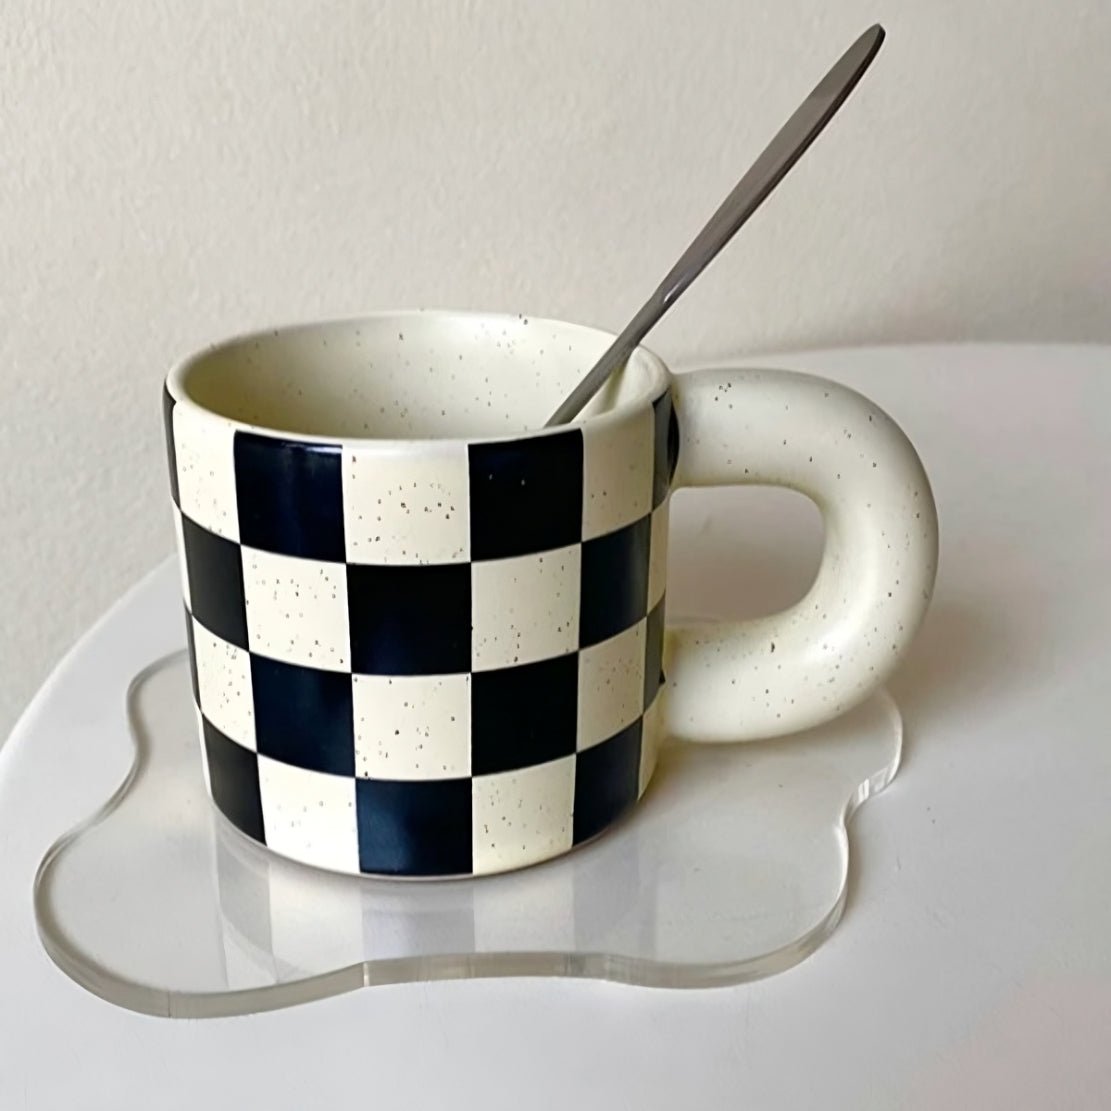 Black white check square mug with acrylic irregular cup holder